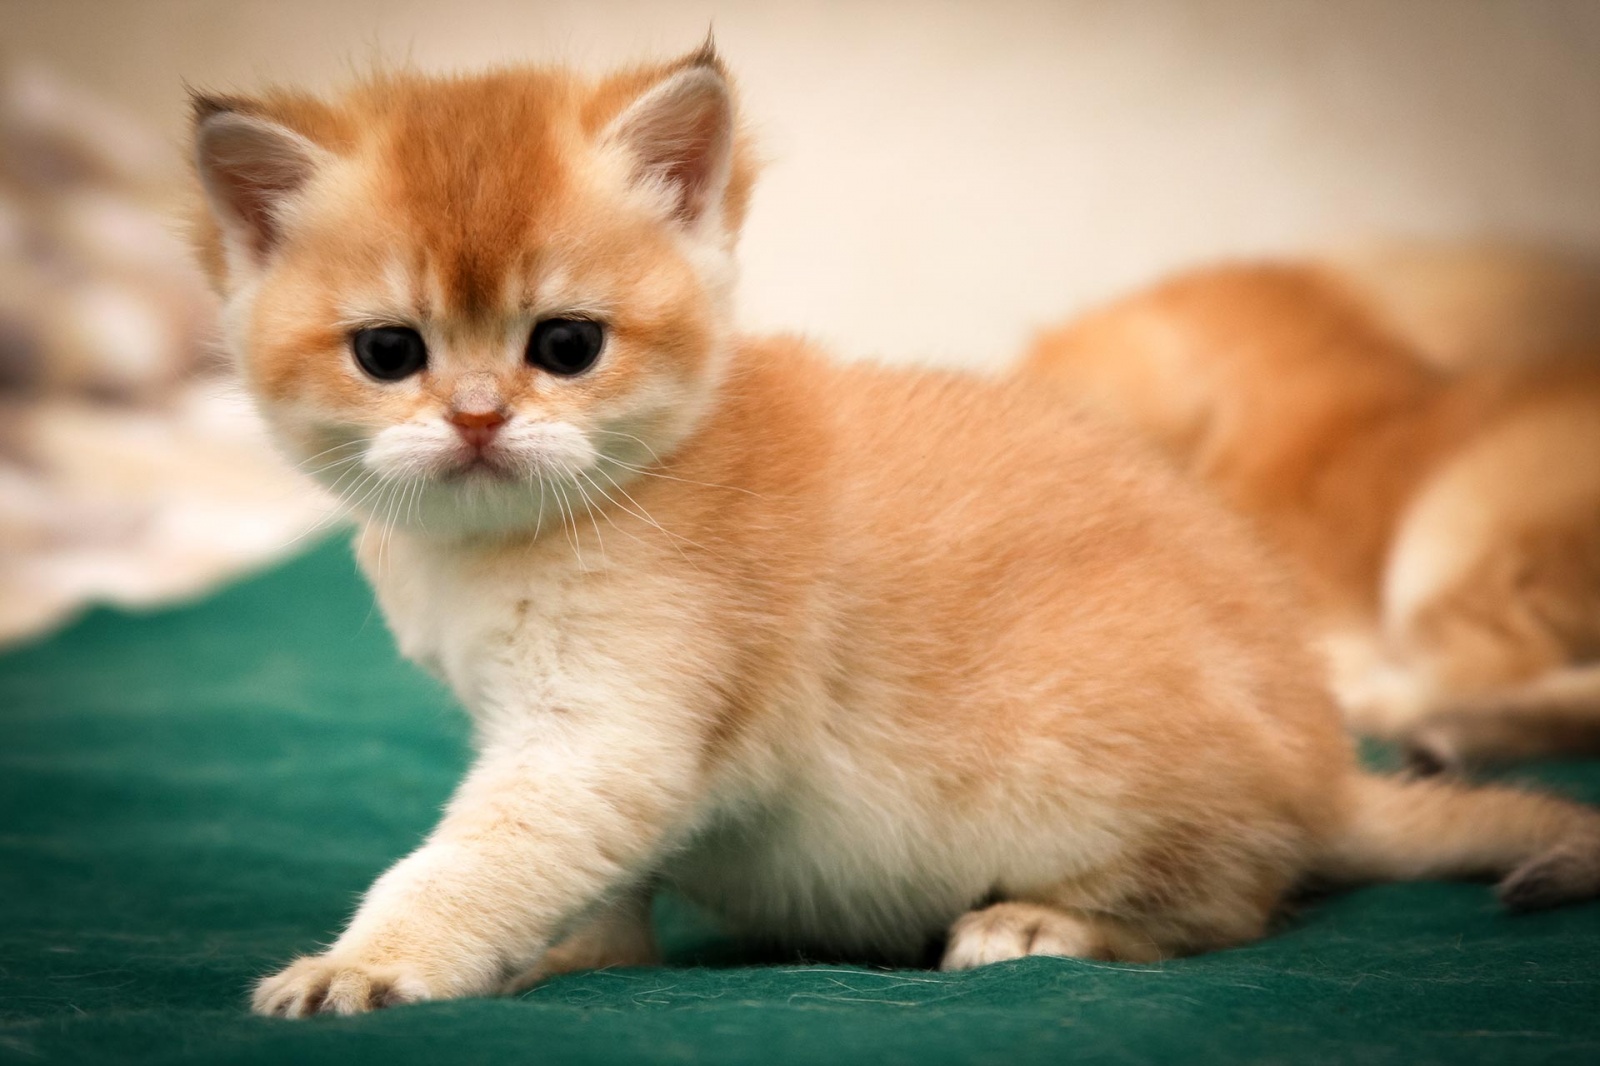 Кот британец рыжий котенок